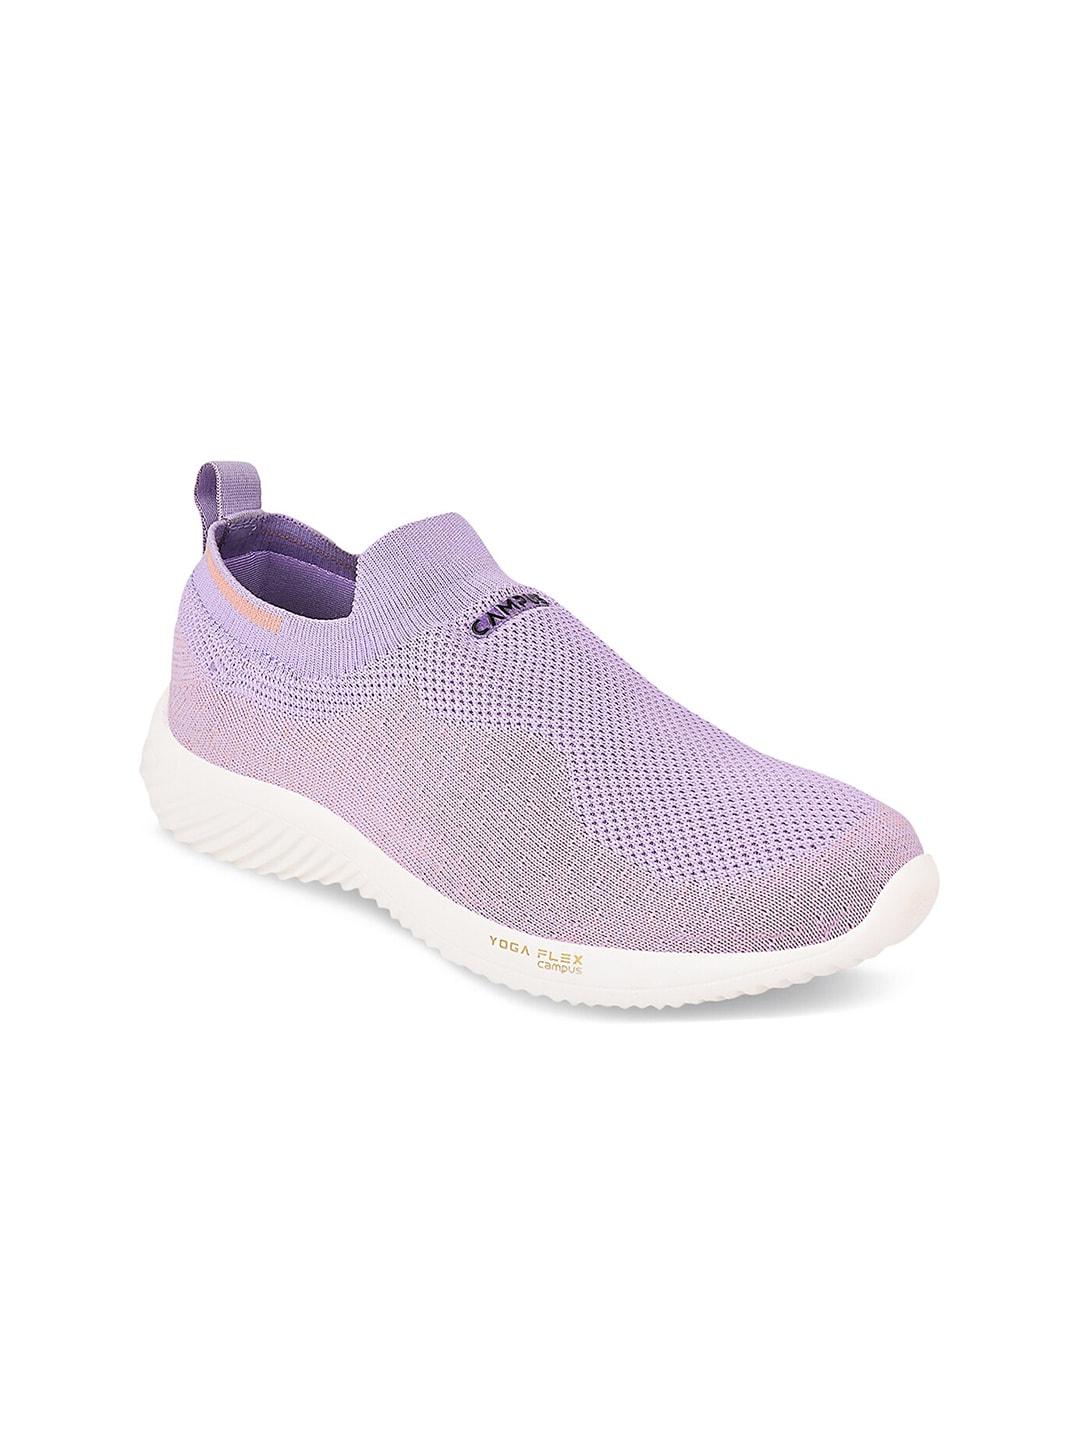 Campus Women Lavender Mesh Walking Shoes Price in India